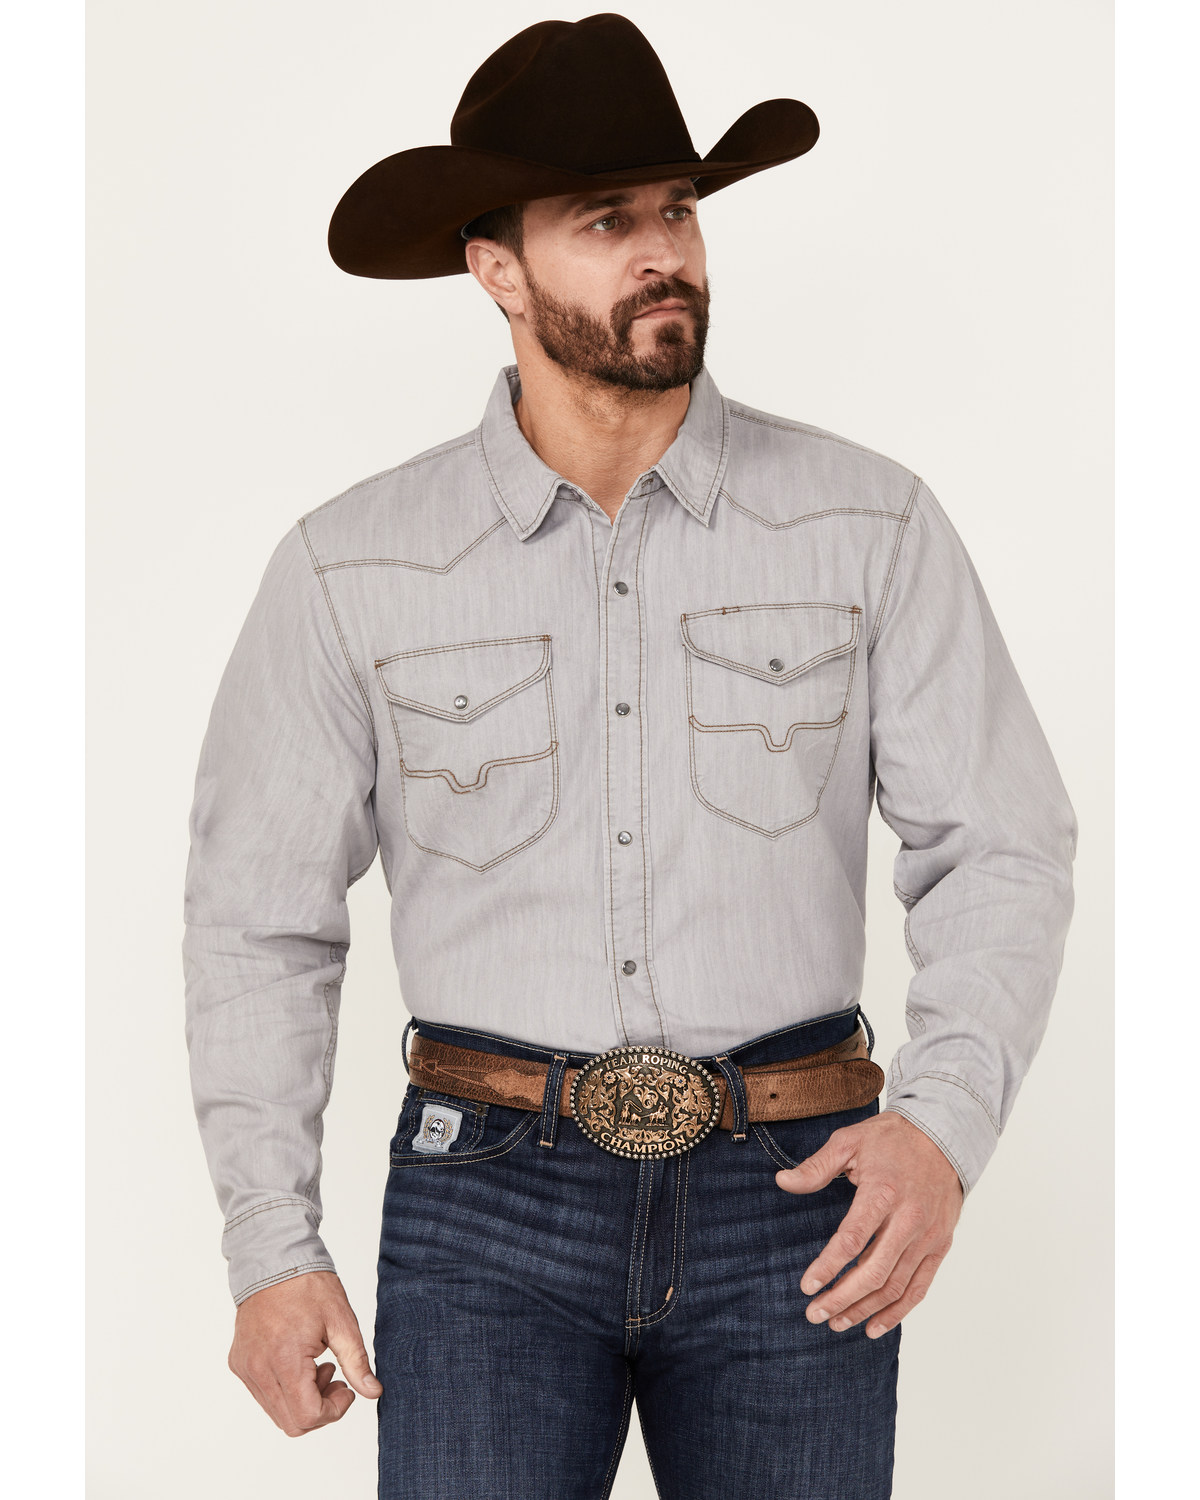 Kimes Ranch Men's Grimes Denim Long Sleeve Pearl Snap Western Shirt